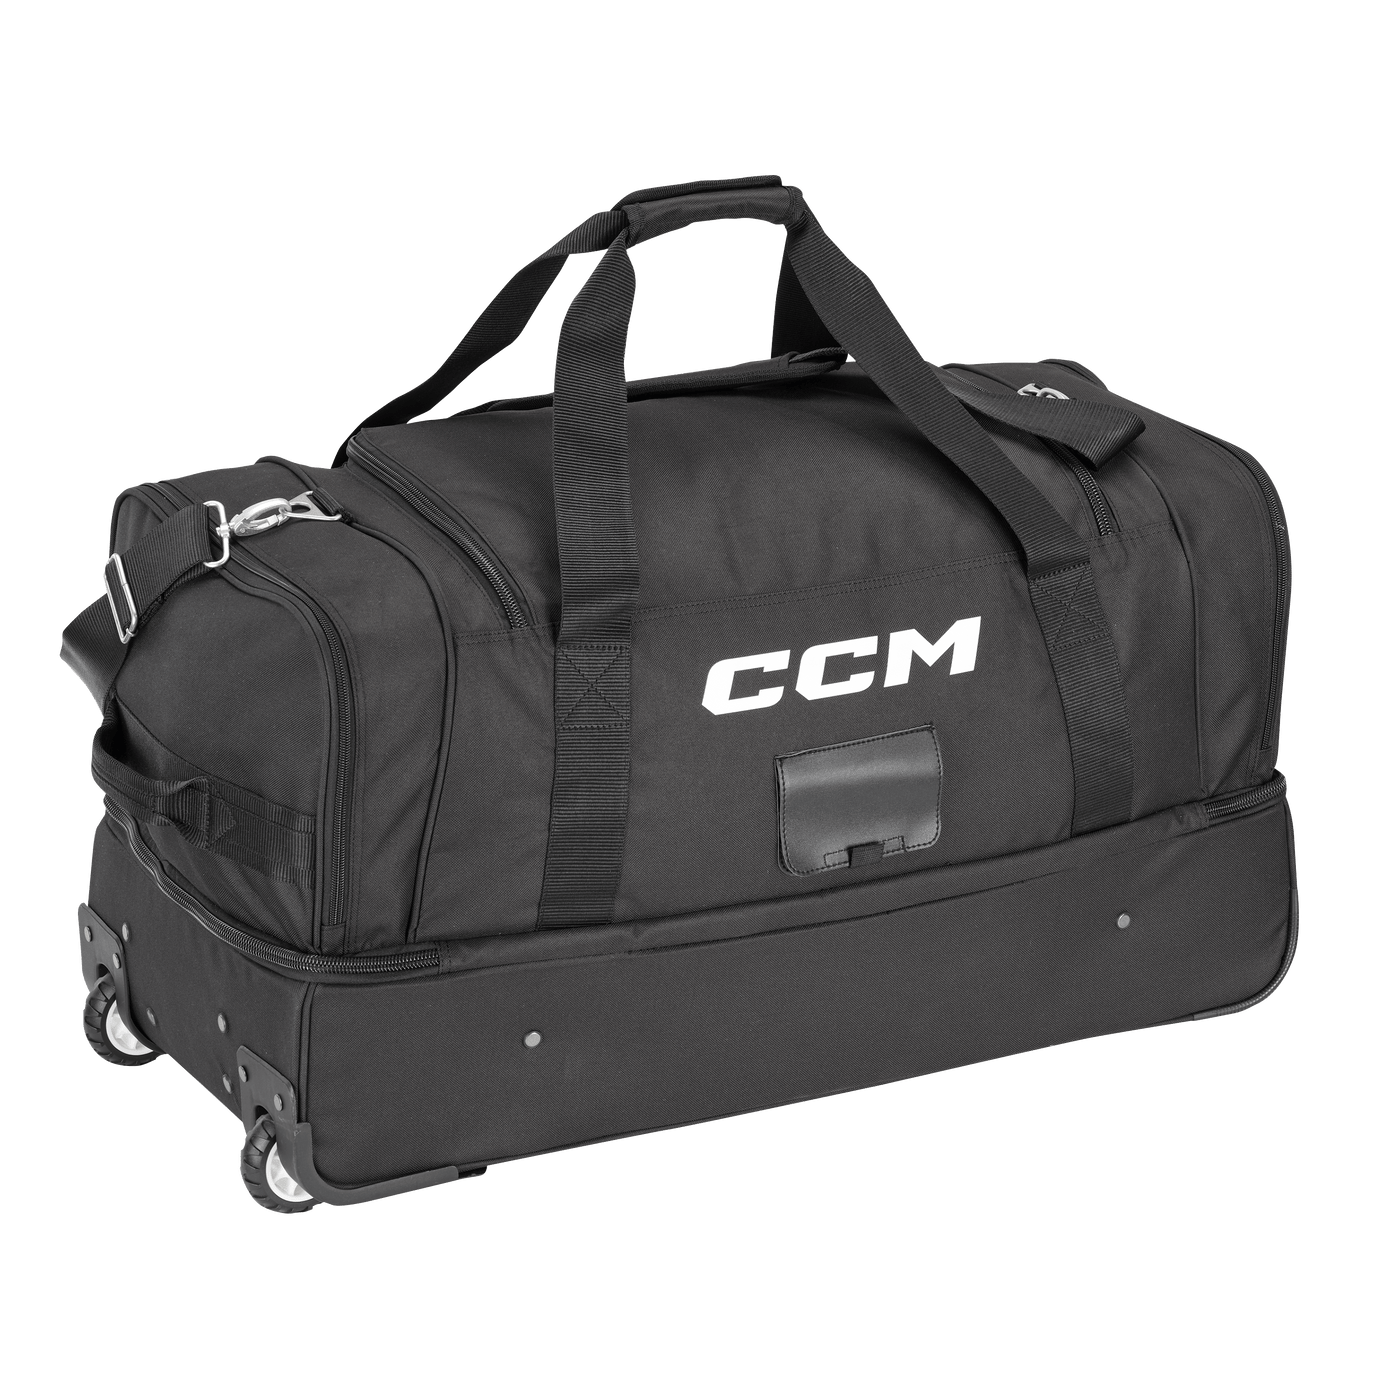 CCM Hockey Referee Wheel Bag - The Hockey Shop Source For Sports